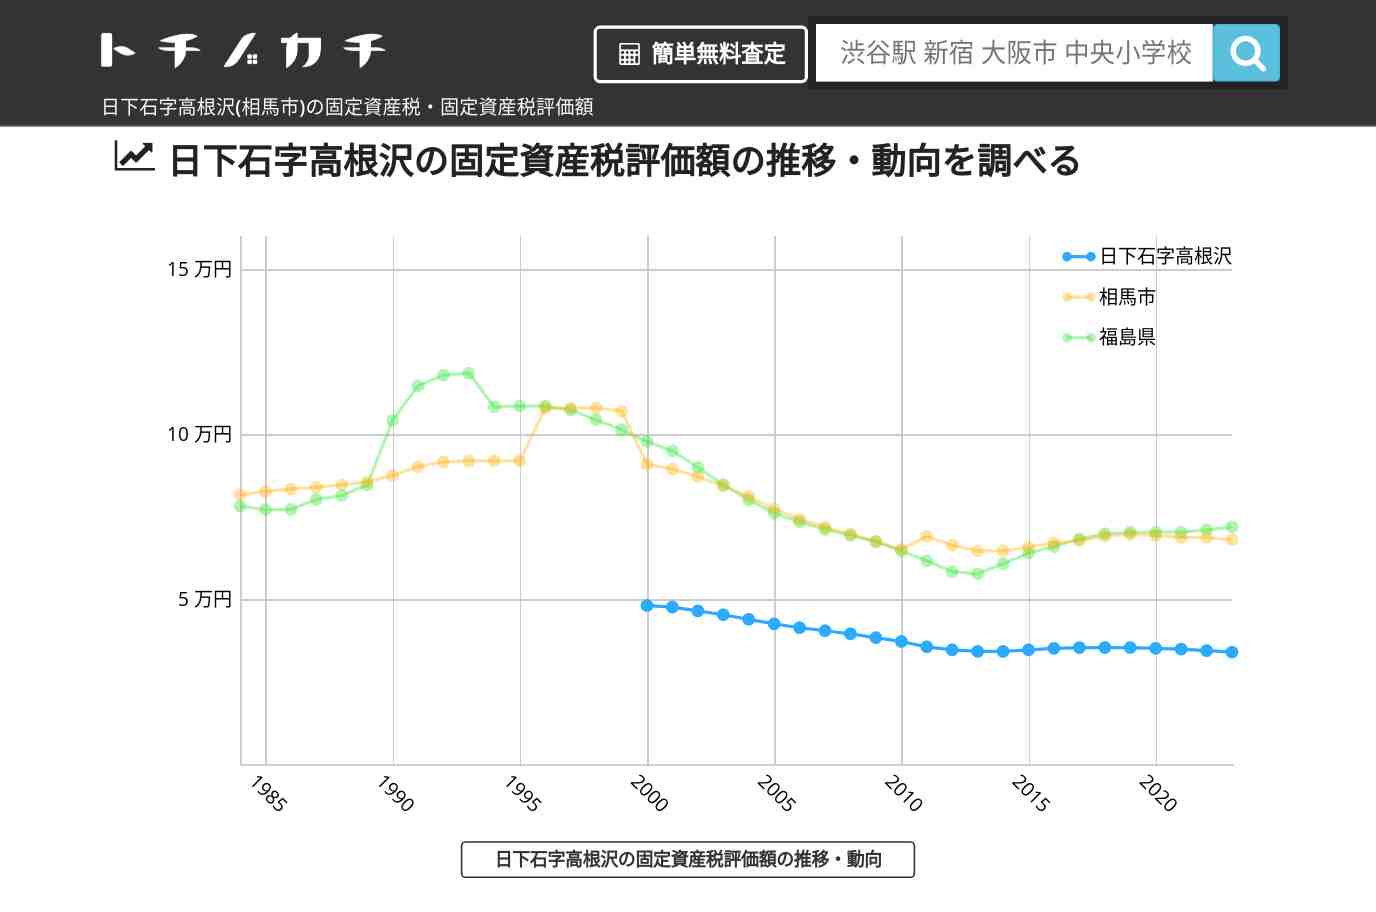 日下石字高根沢(相馬市)の固定資産税・固定資産税評価額 | トチノカチ